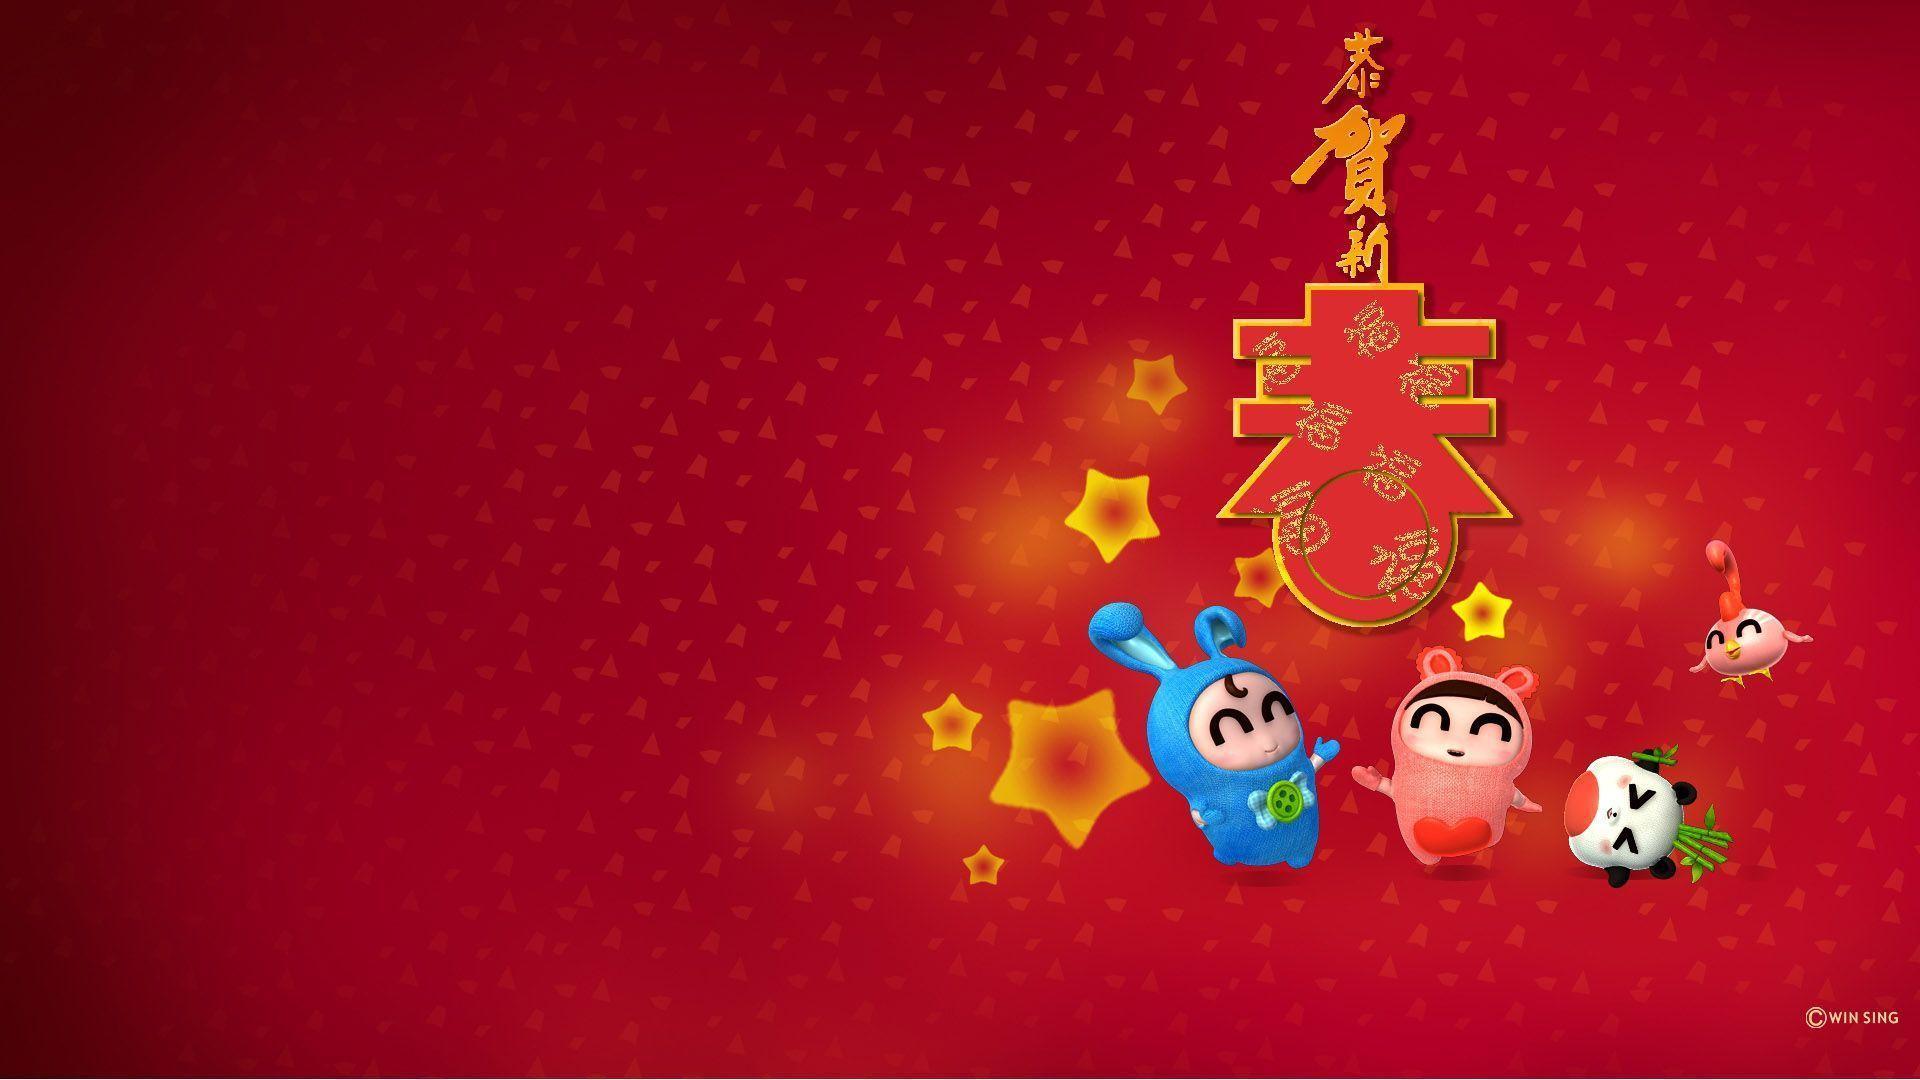 Chinese New Year 2014 Free Desktop Wallpaper, High